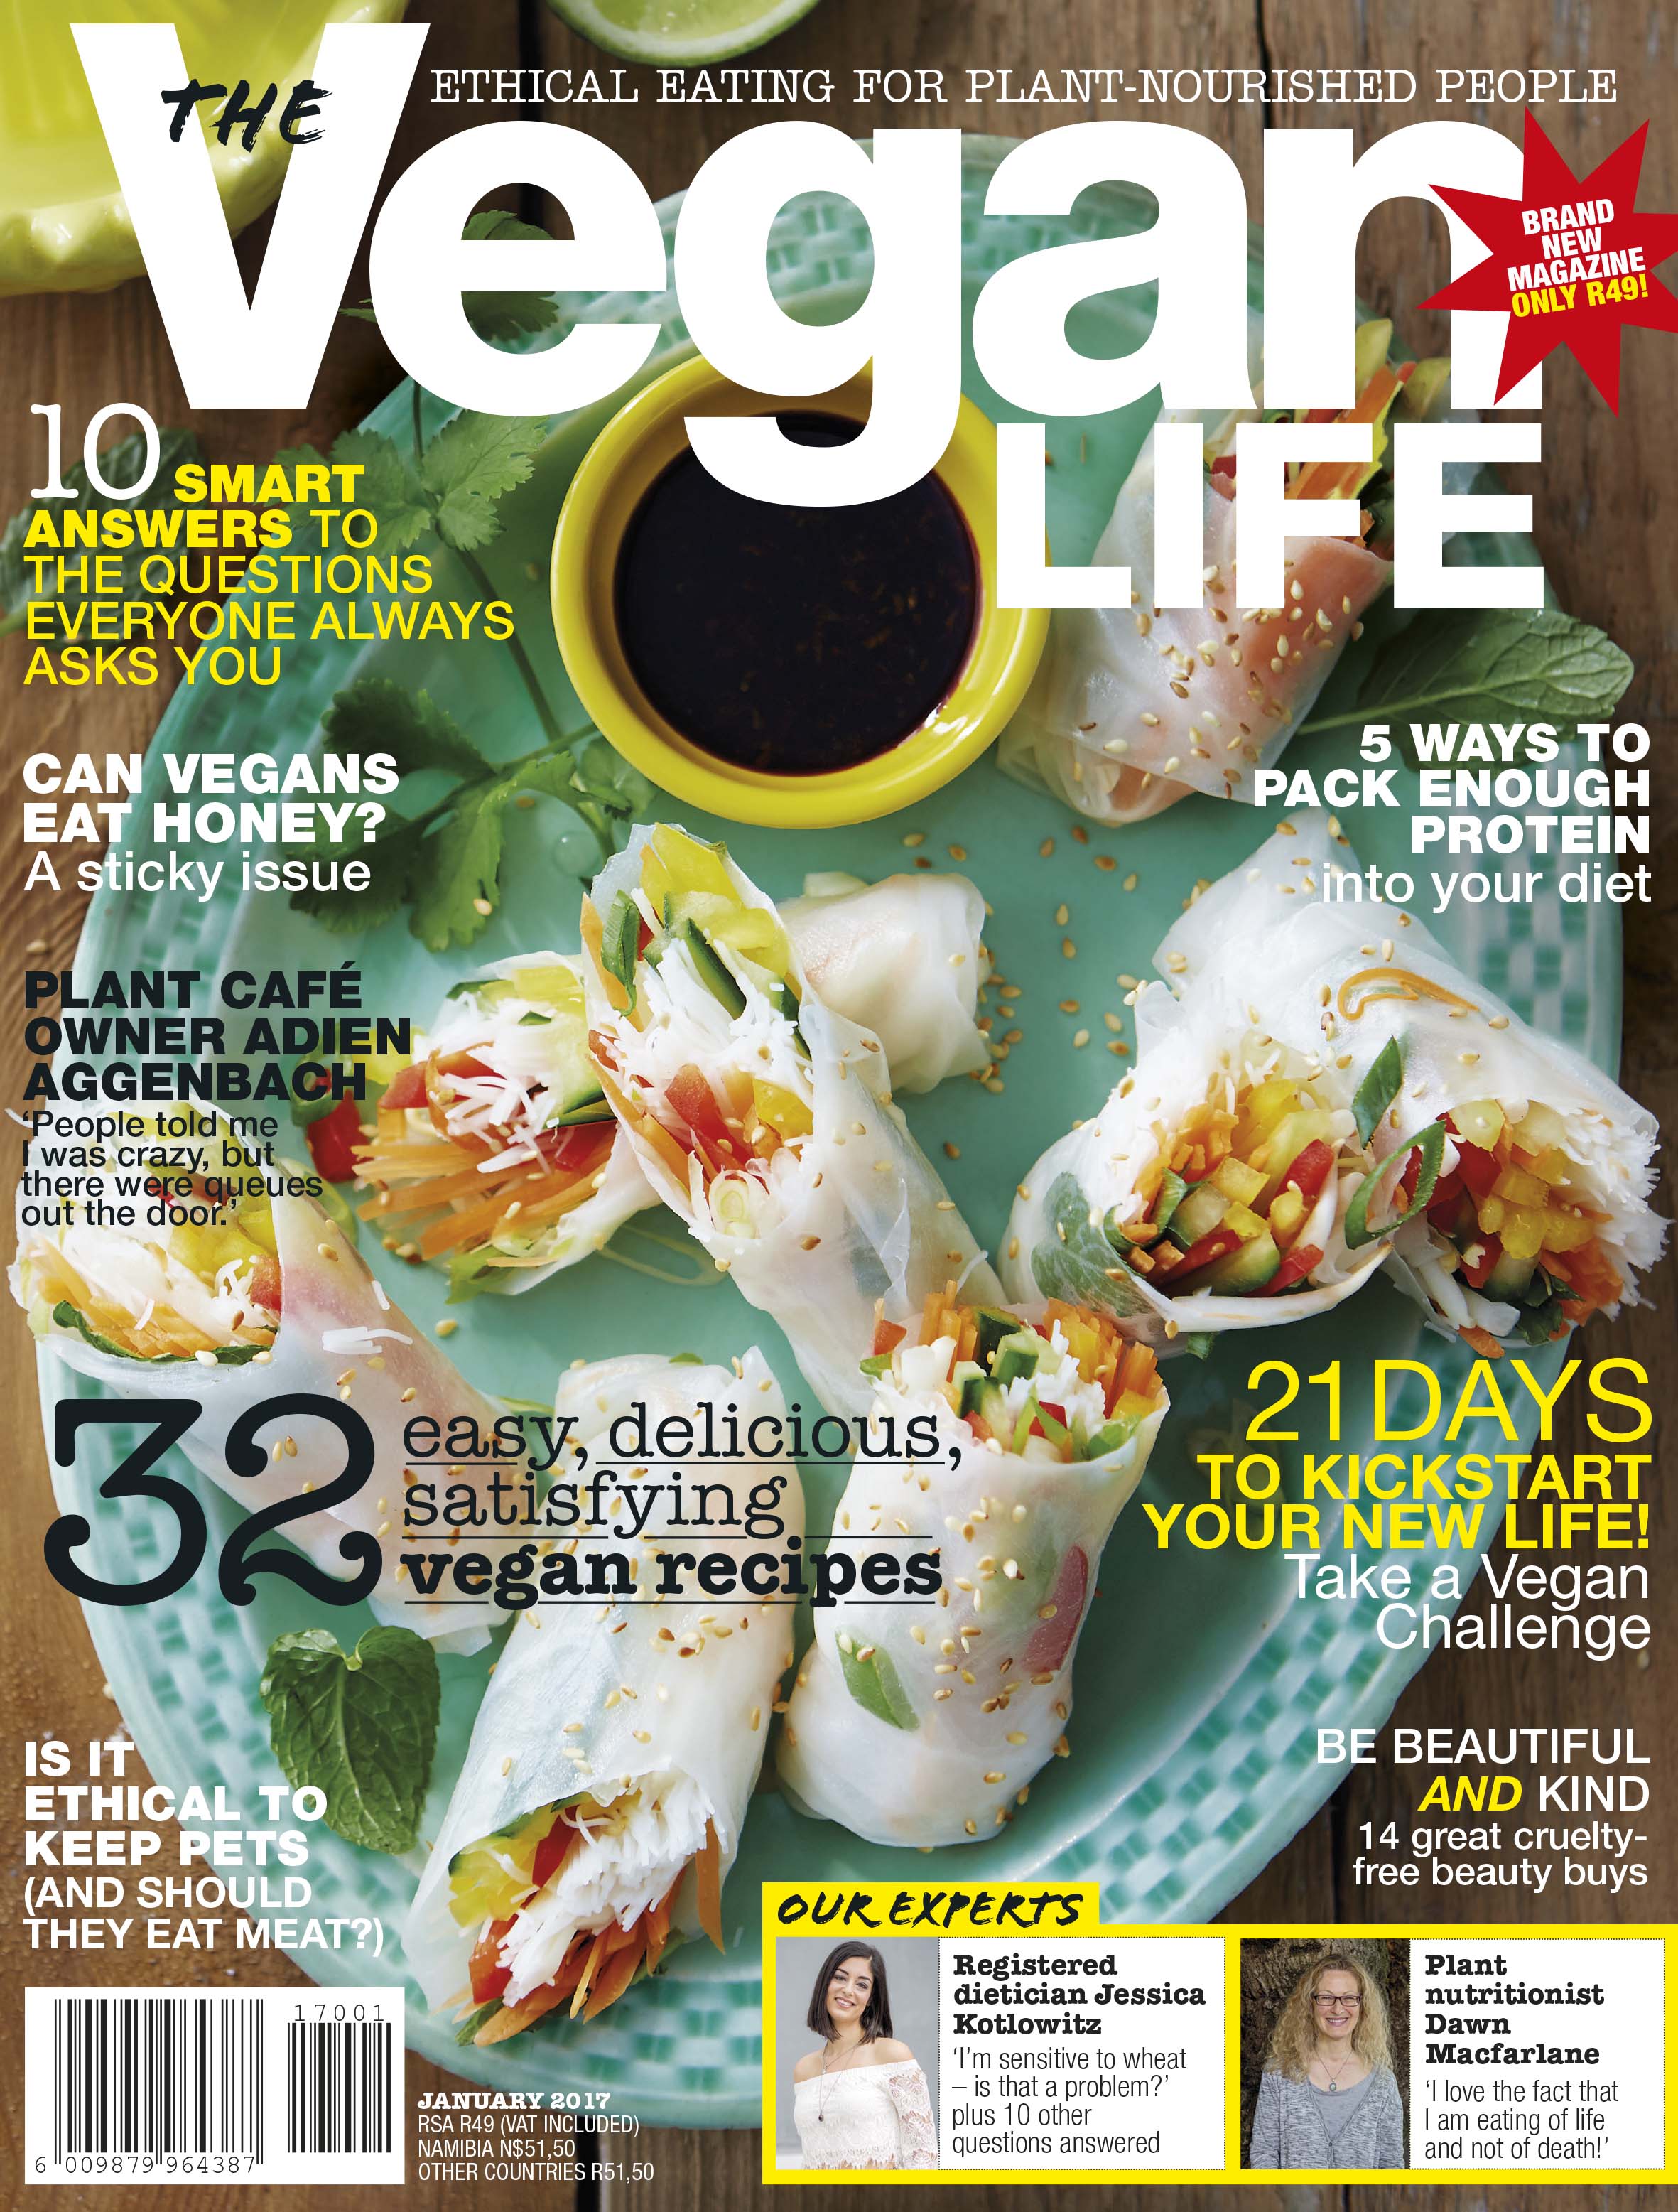 Media24 launches new The Vegan LIFE magazine